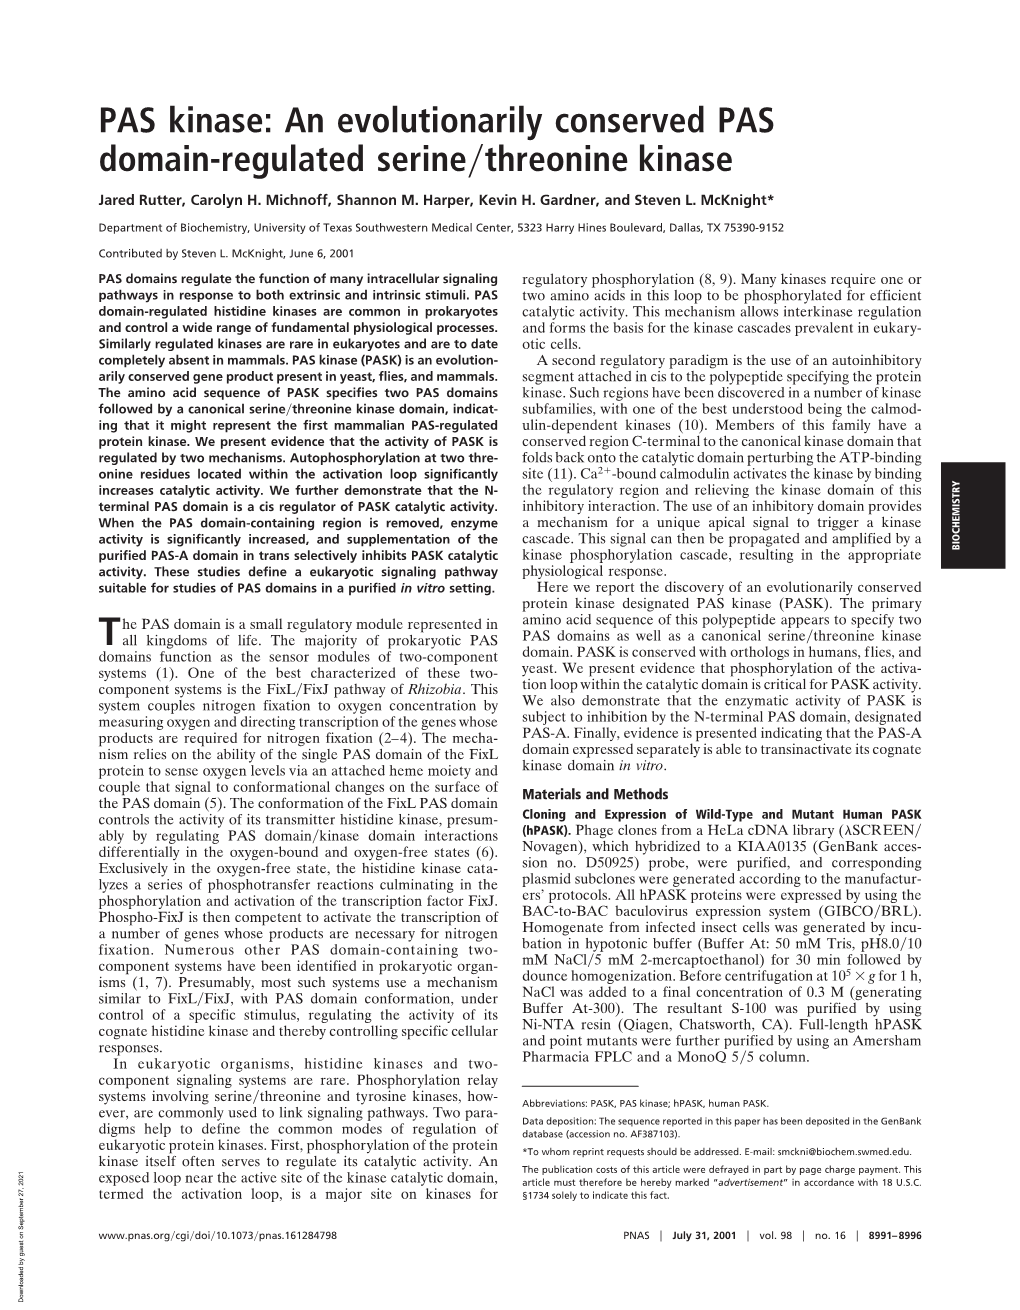 PAS Kinase: an Evolutionarily Conserved PAS Domain-Regulated Serine͞threonine Kinase